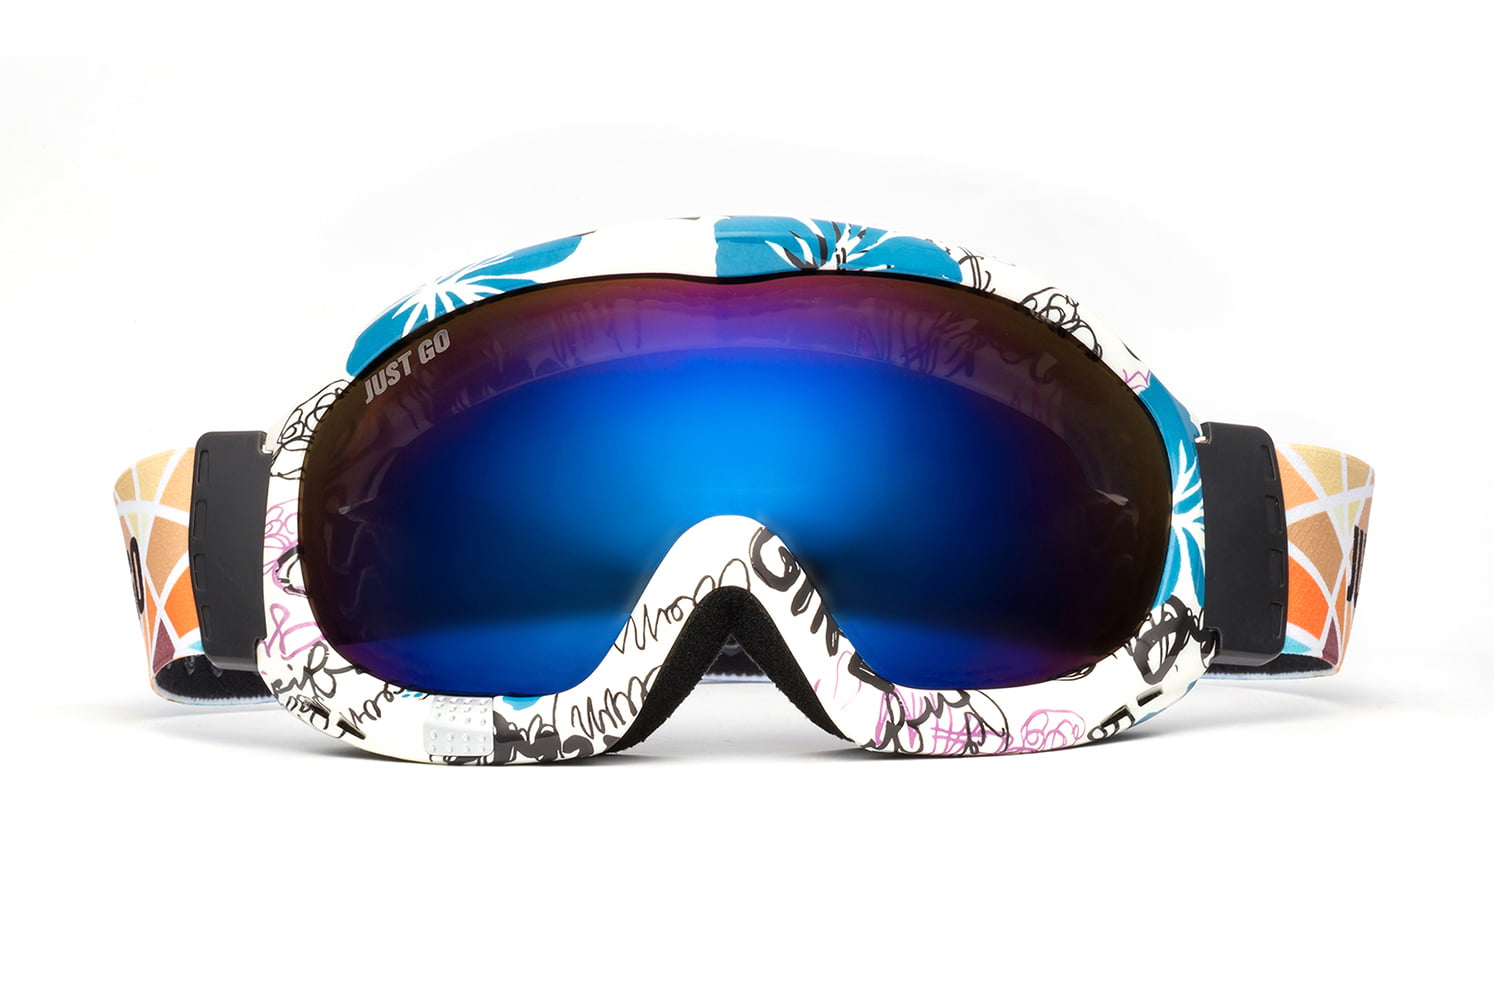 Accessoires Zonnebrillen & Eyewear Sportbrillen Ski Snowboard Sneeuwscooter Frameless 100% UV400 Protection Goggles voor Mannen Vrouwen Jeugd Anti-Fog Snow Goggle 